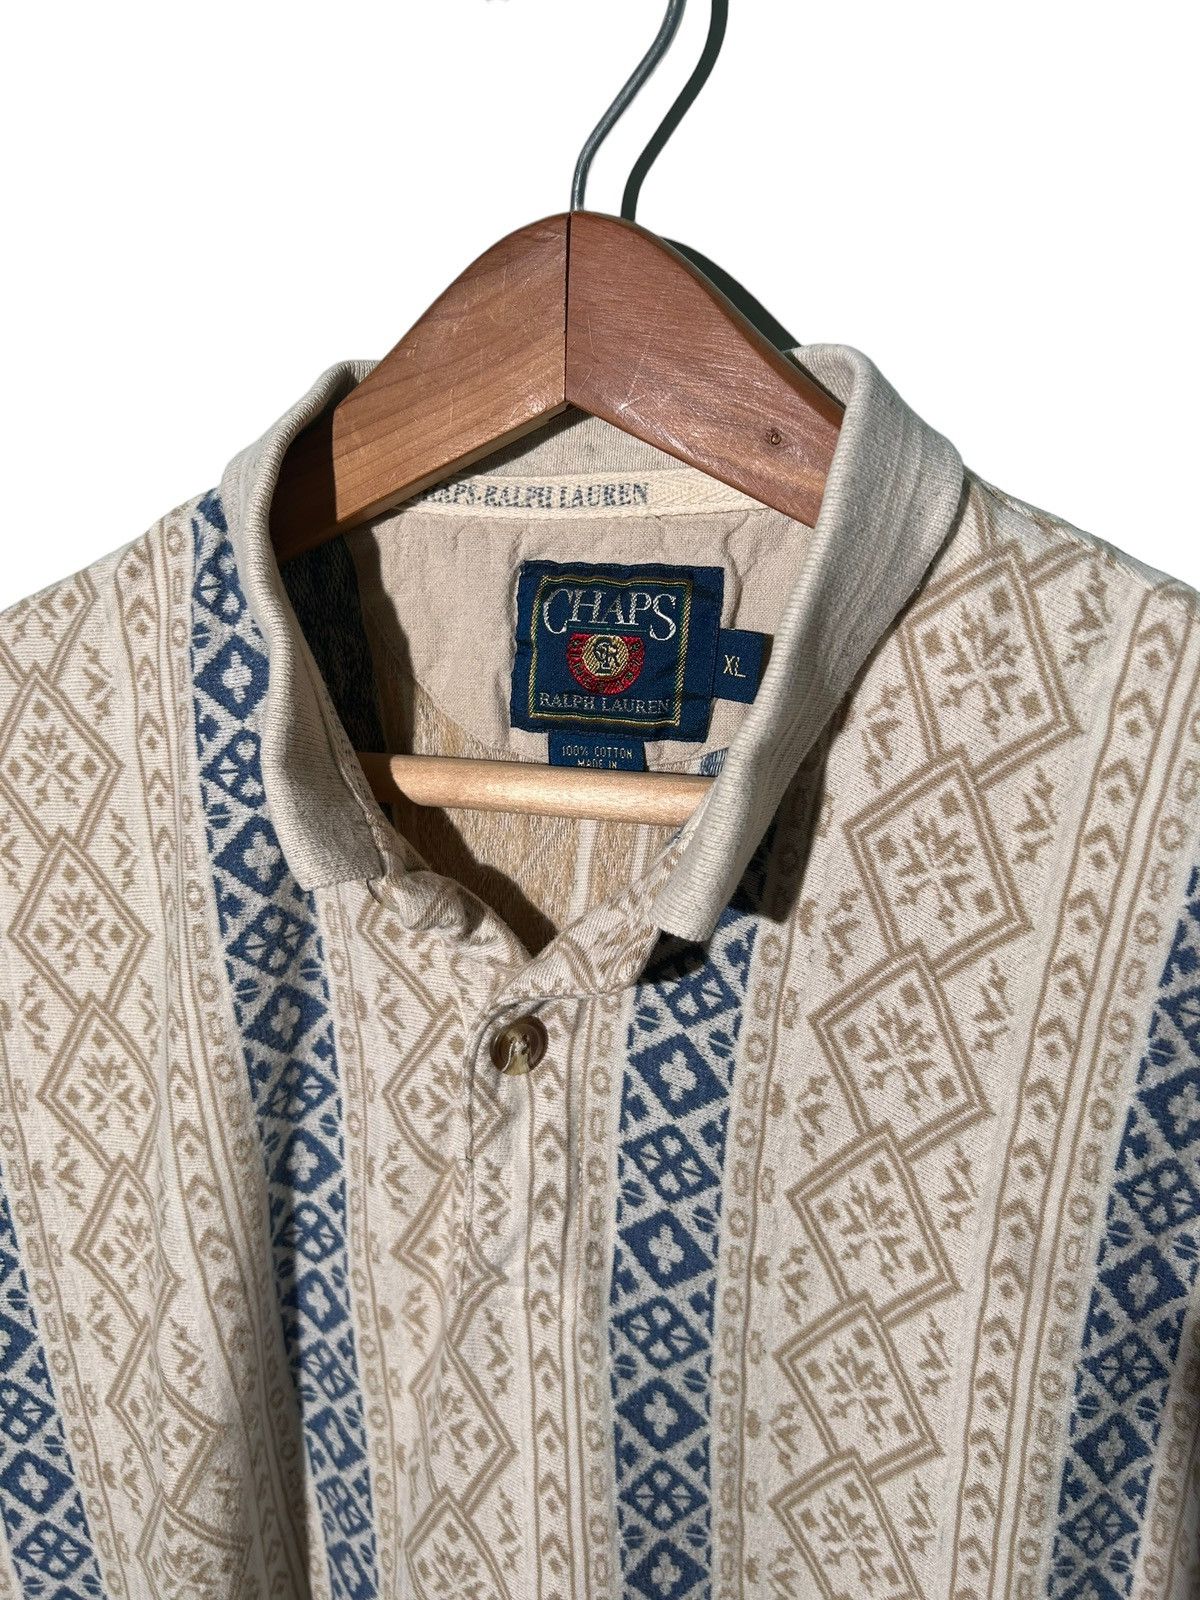 Chaps Ralph Lauren Vintage Chaps Ralph Lauren polo shirt tribal mosaic pattern Size US XL / EU 56 / 4 - 2 Preview